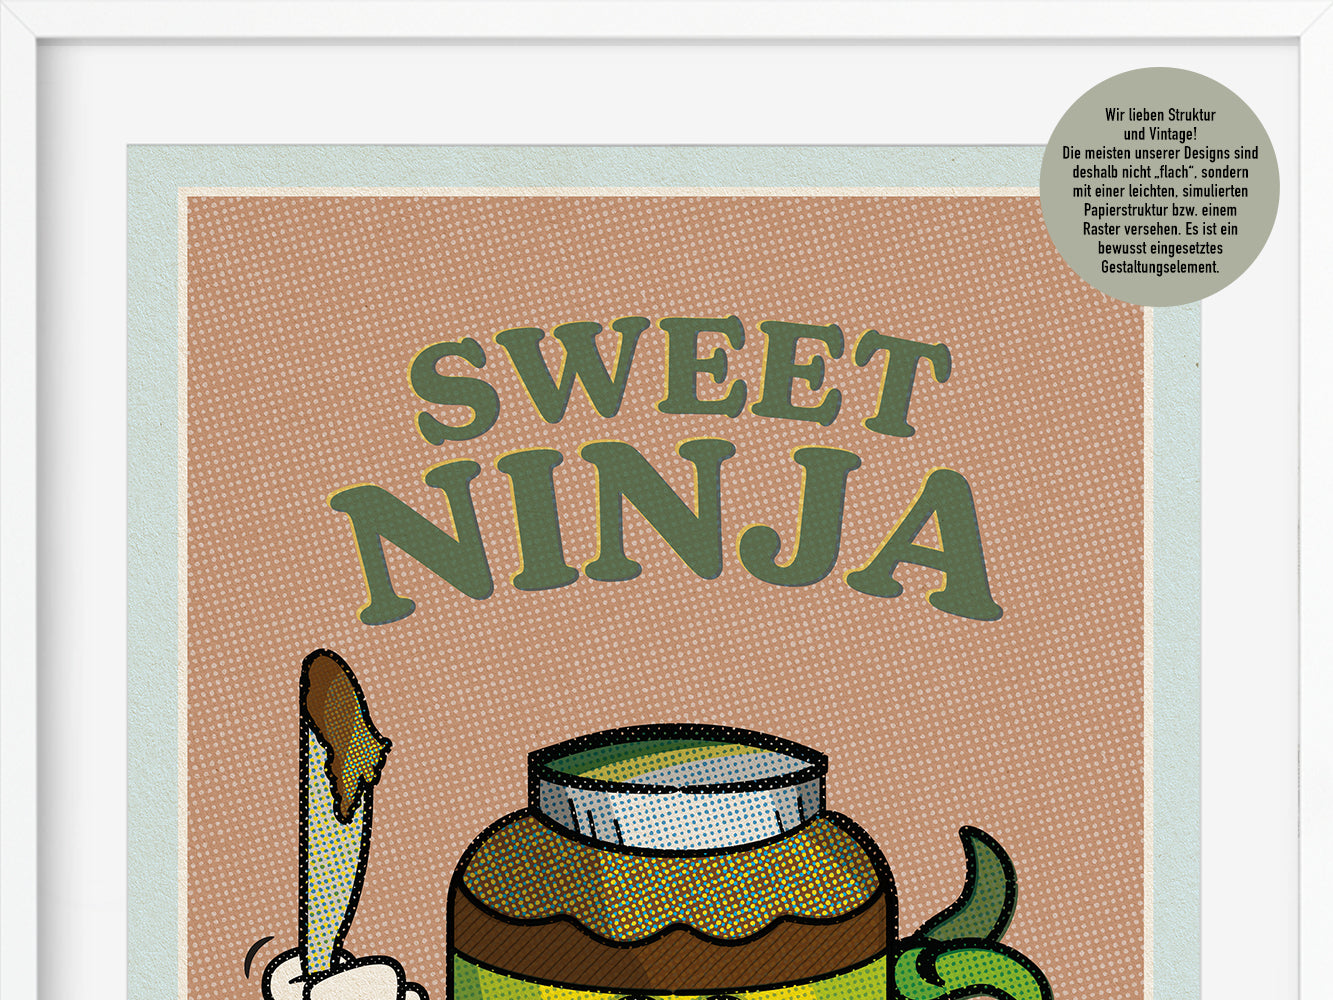 DRUCK ›Sweet Ninja‹ / Wanddeko, Art Print, Junge, Comic, Cartoon, Illustation, Retro Poster, Wandbild, Kinderzimmer, Frühstück